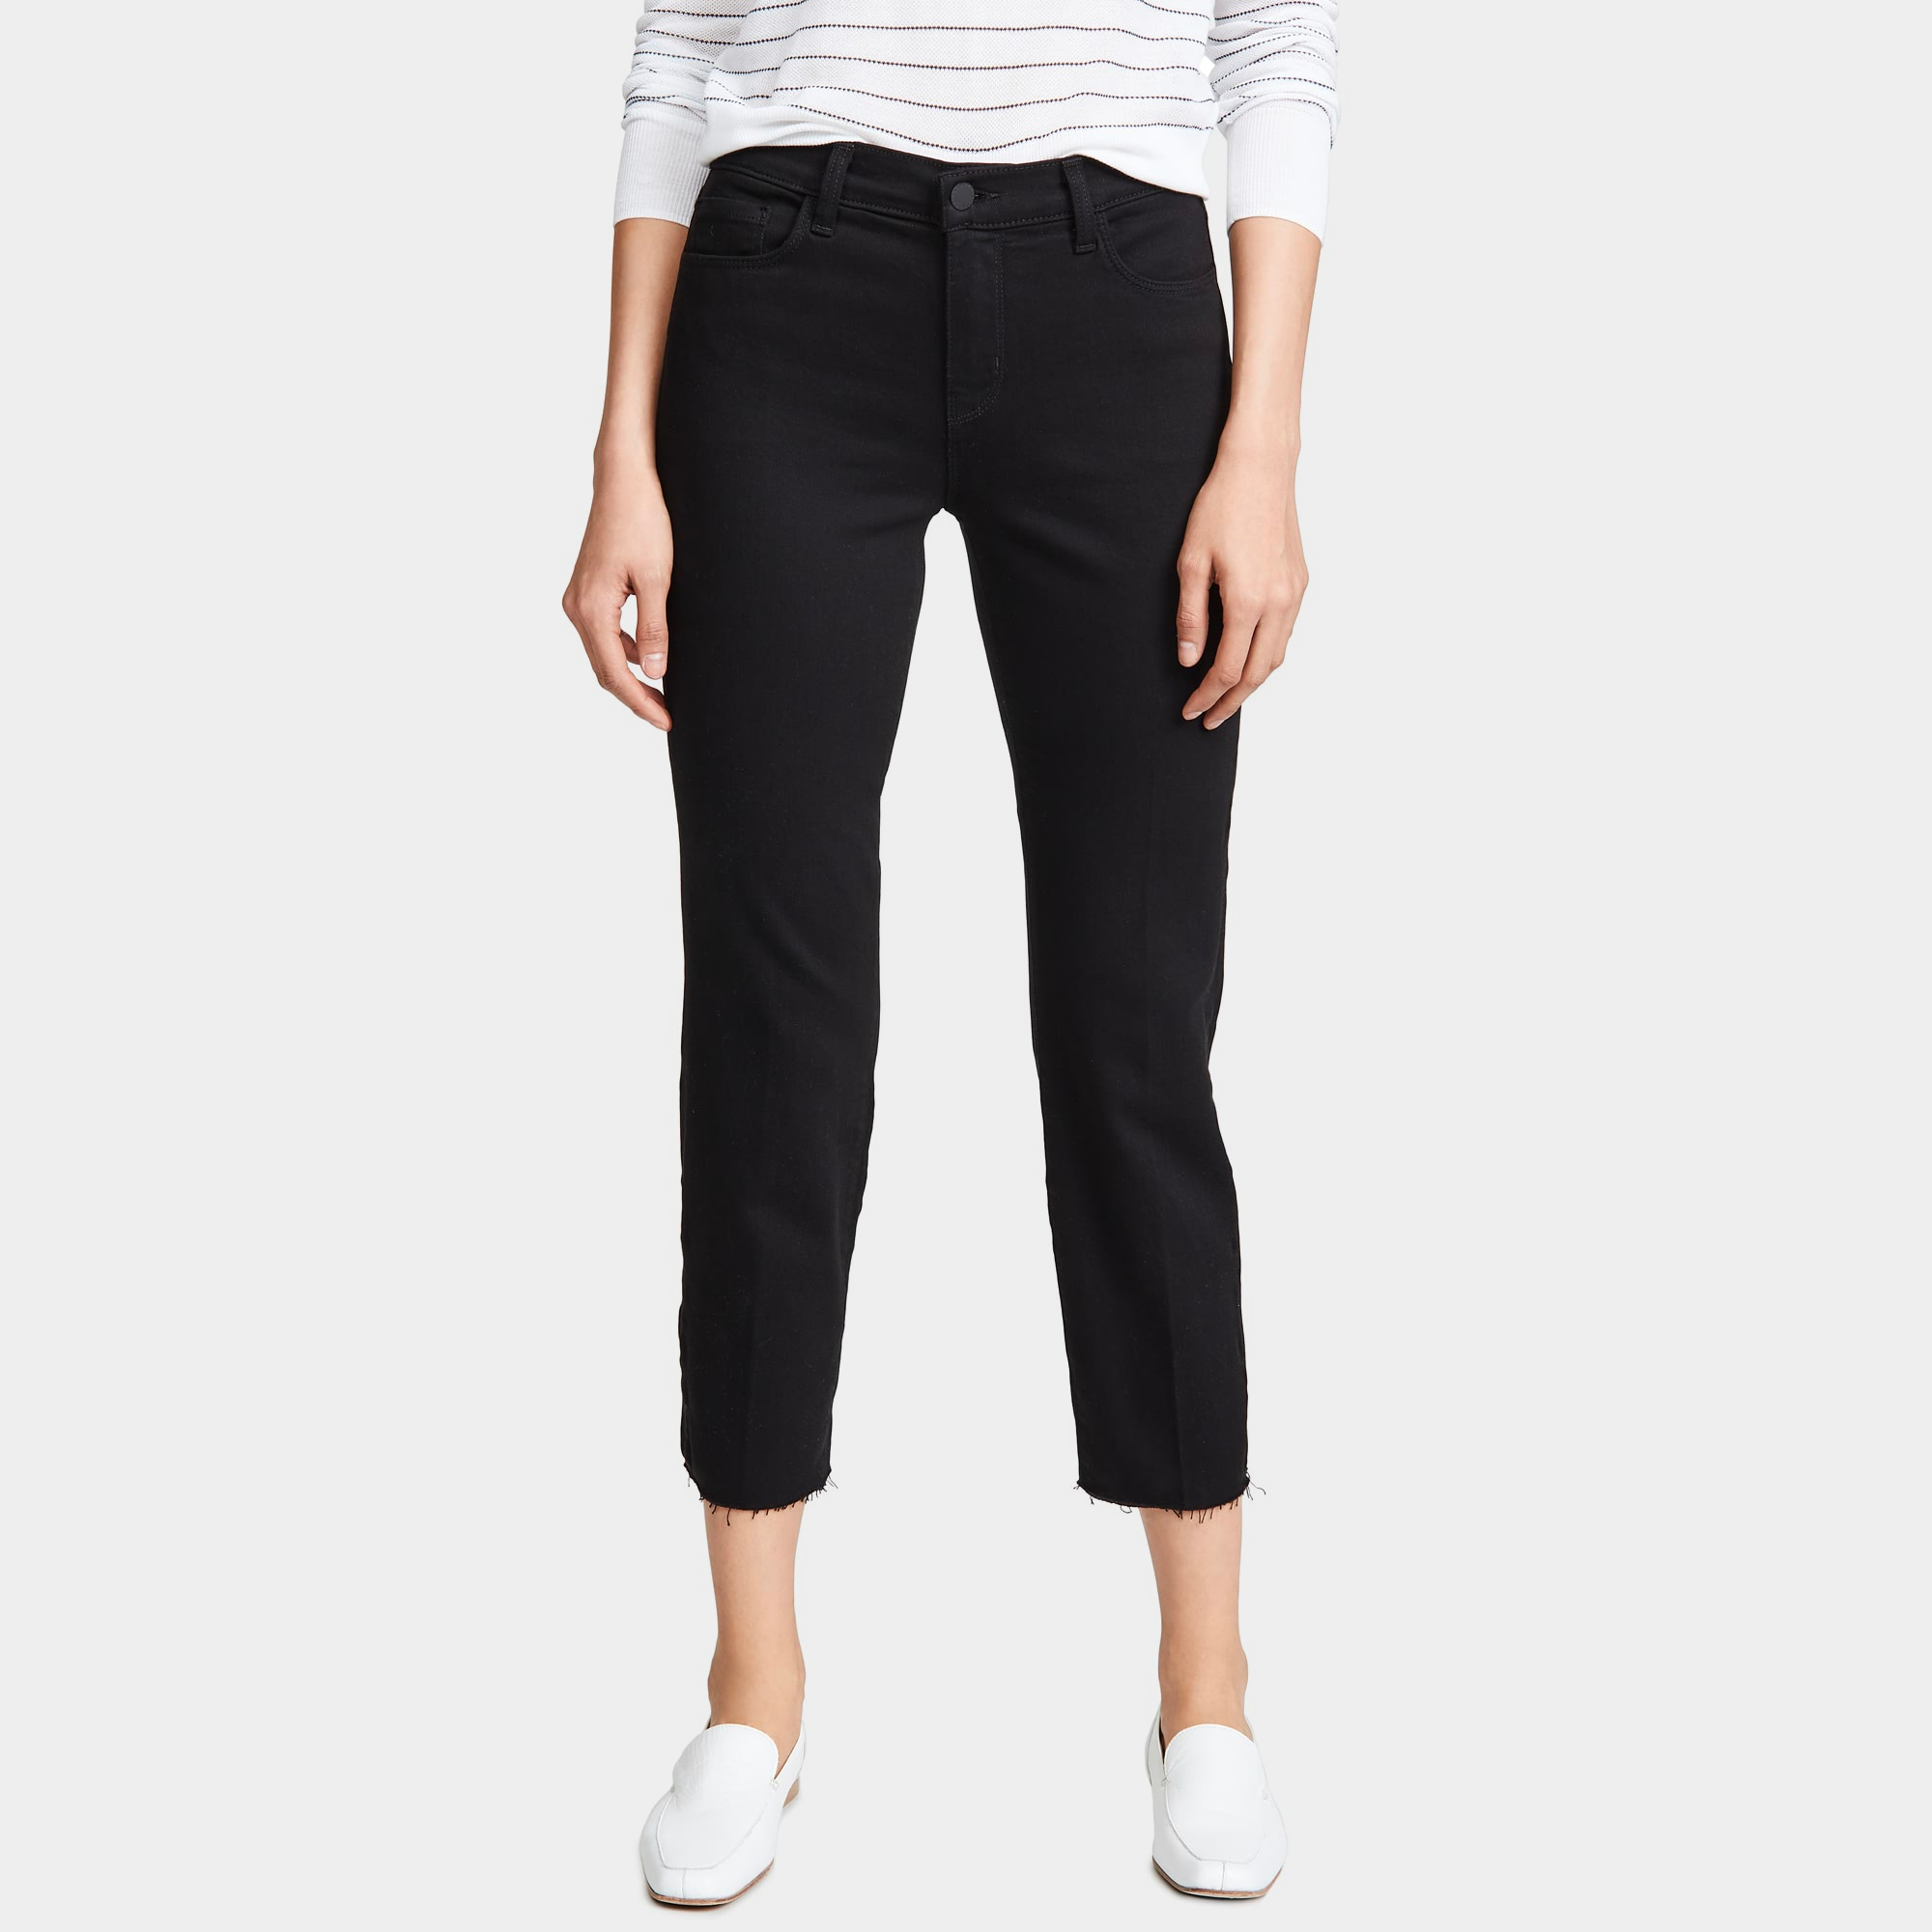 L'AGENCE Sada High-Rise Crop Slim Straight Jeans in Black